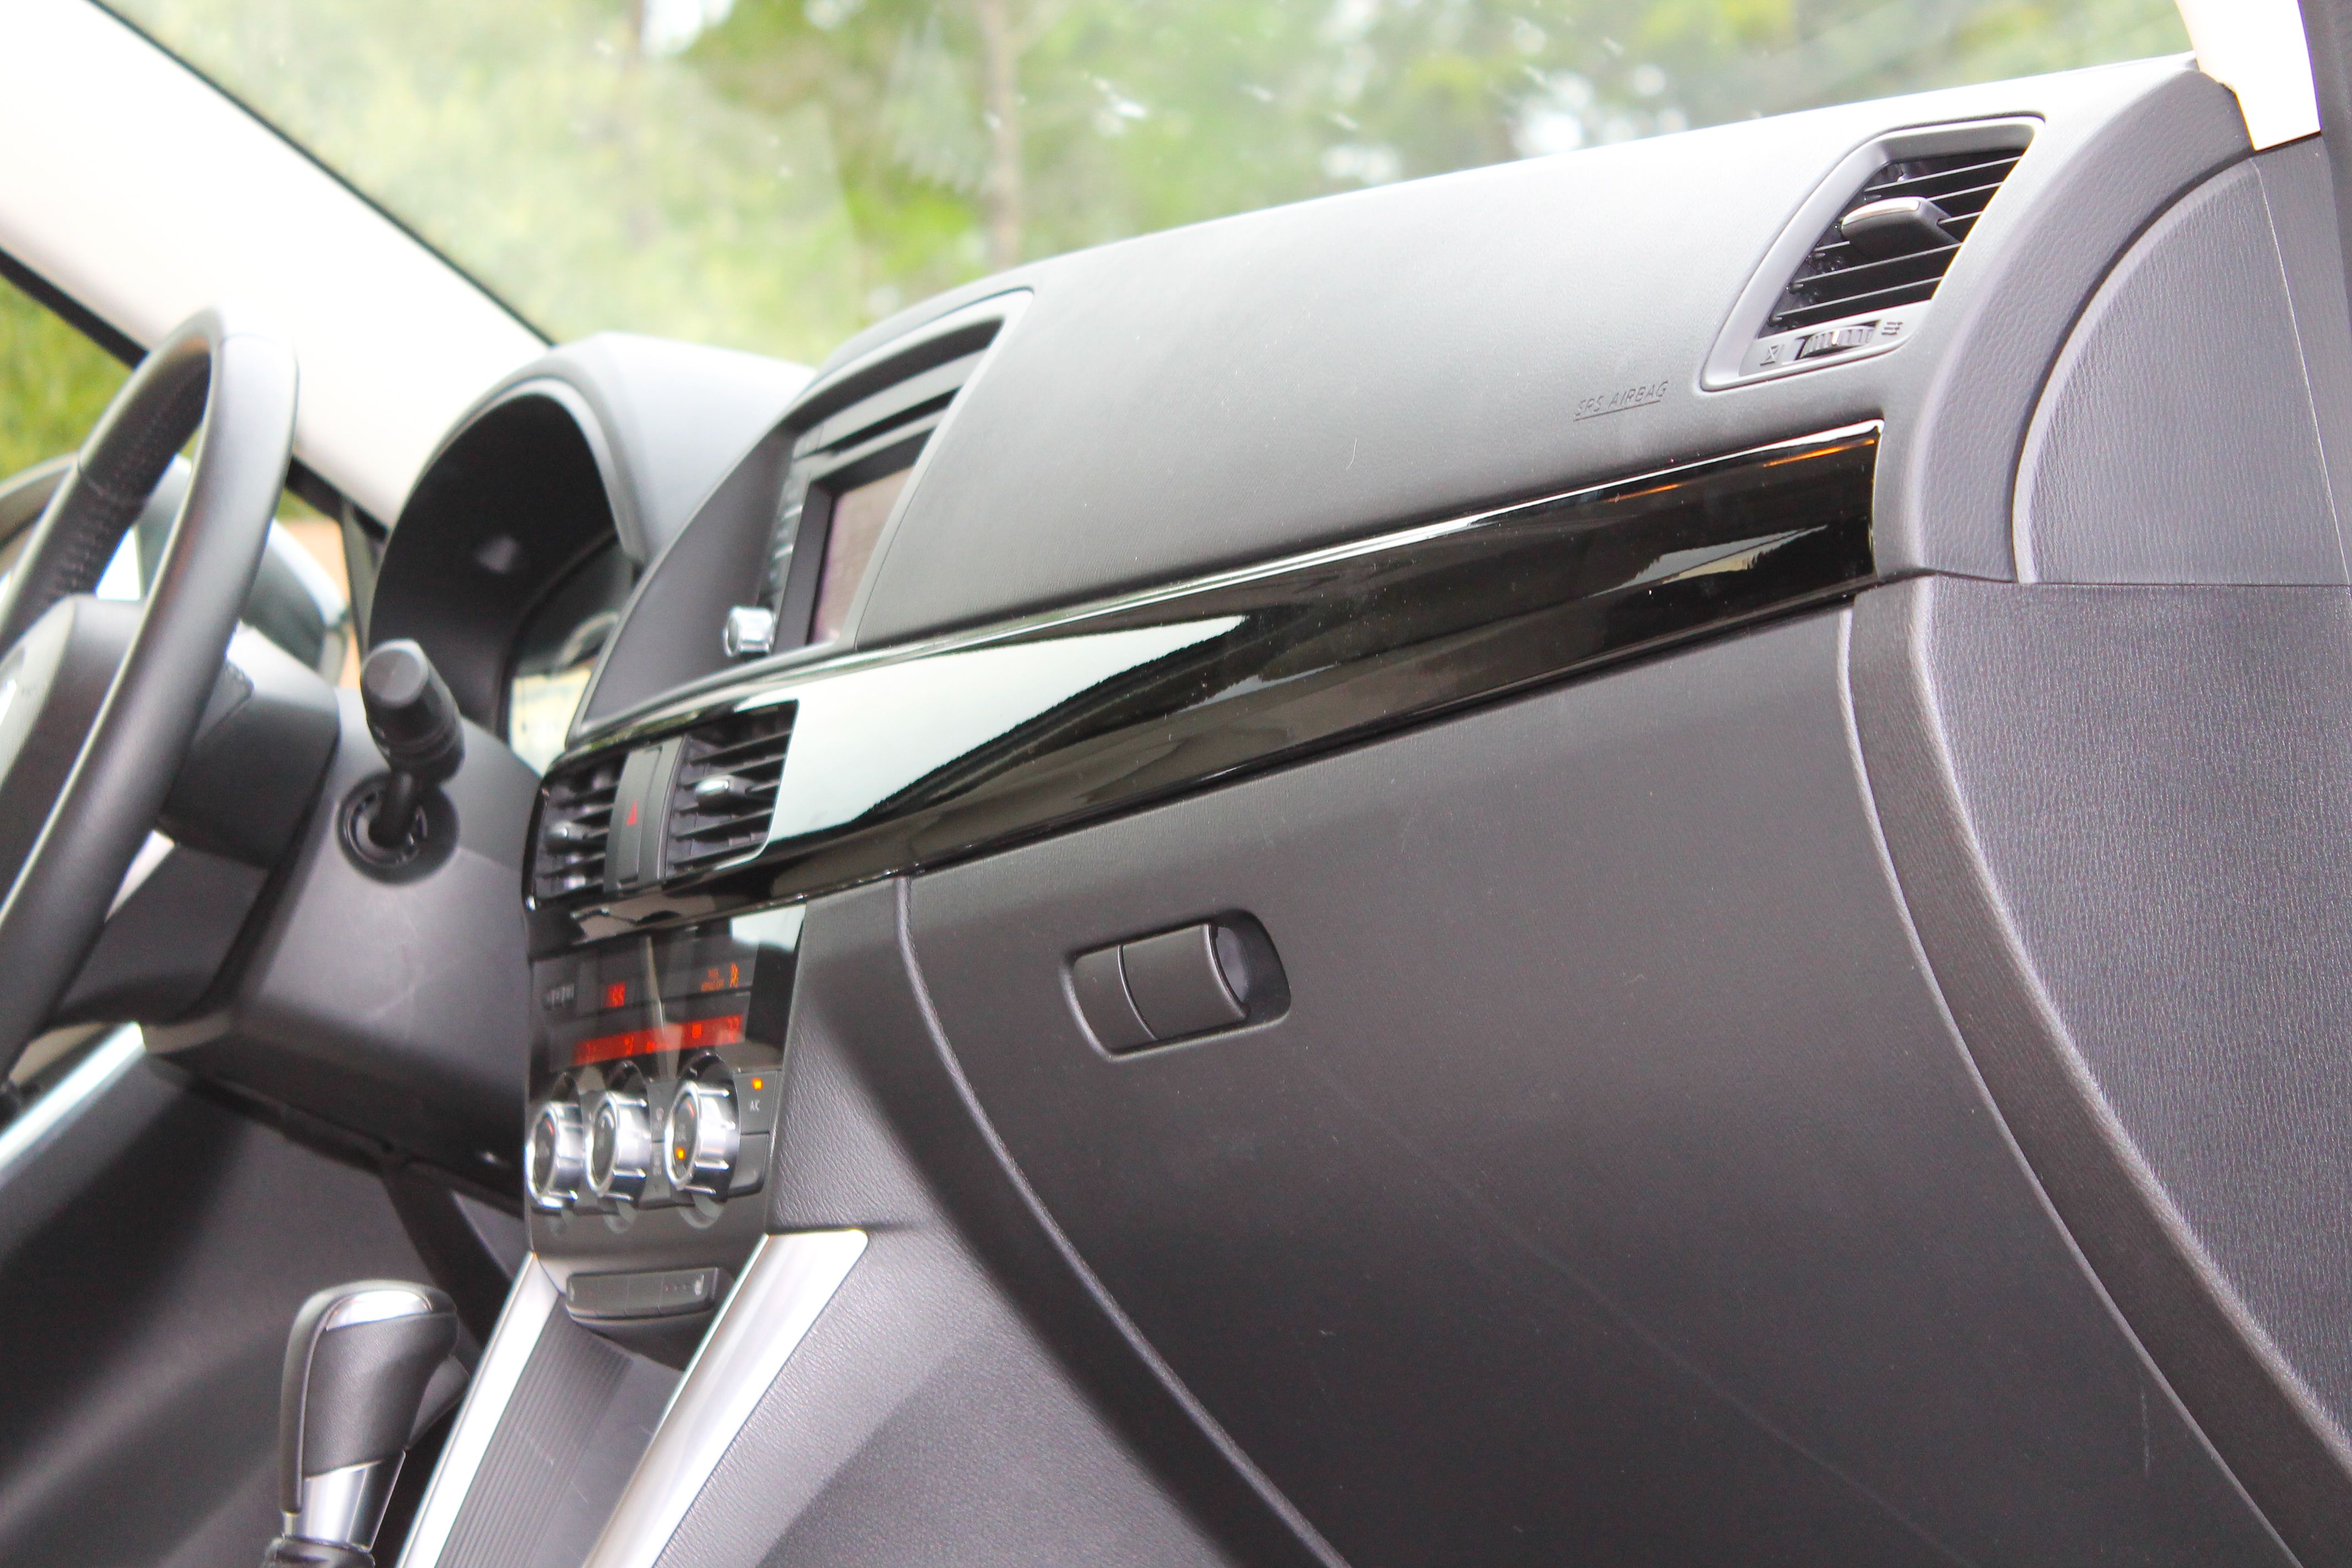 2015 Mazda CX-5 Grand Touring w/ Tech Package - Driven